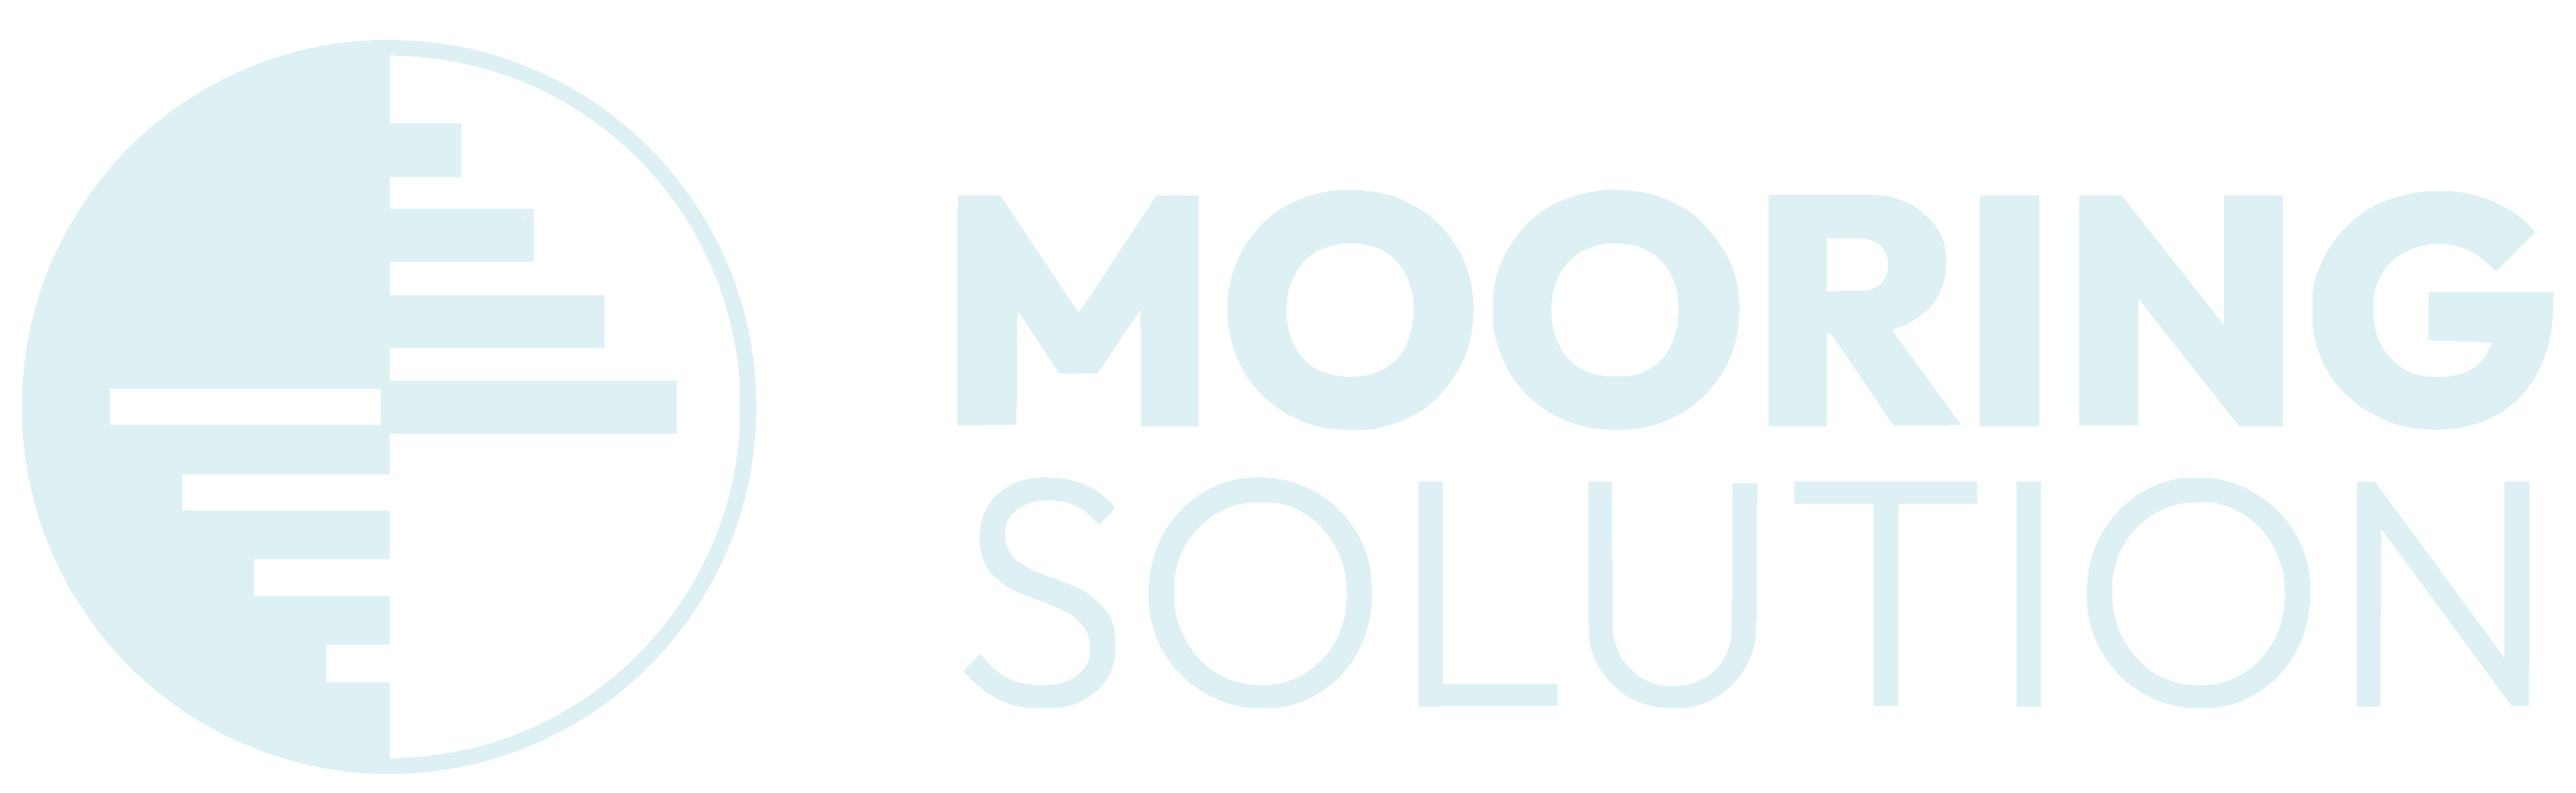 Logo-Morphea-turquoise